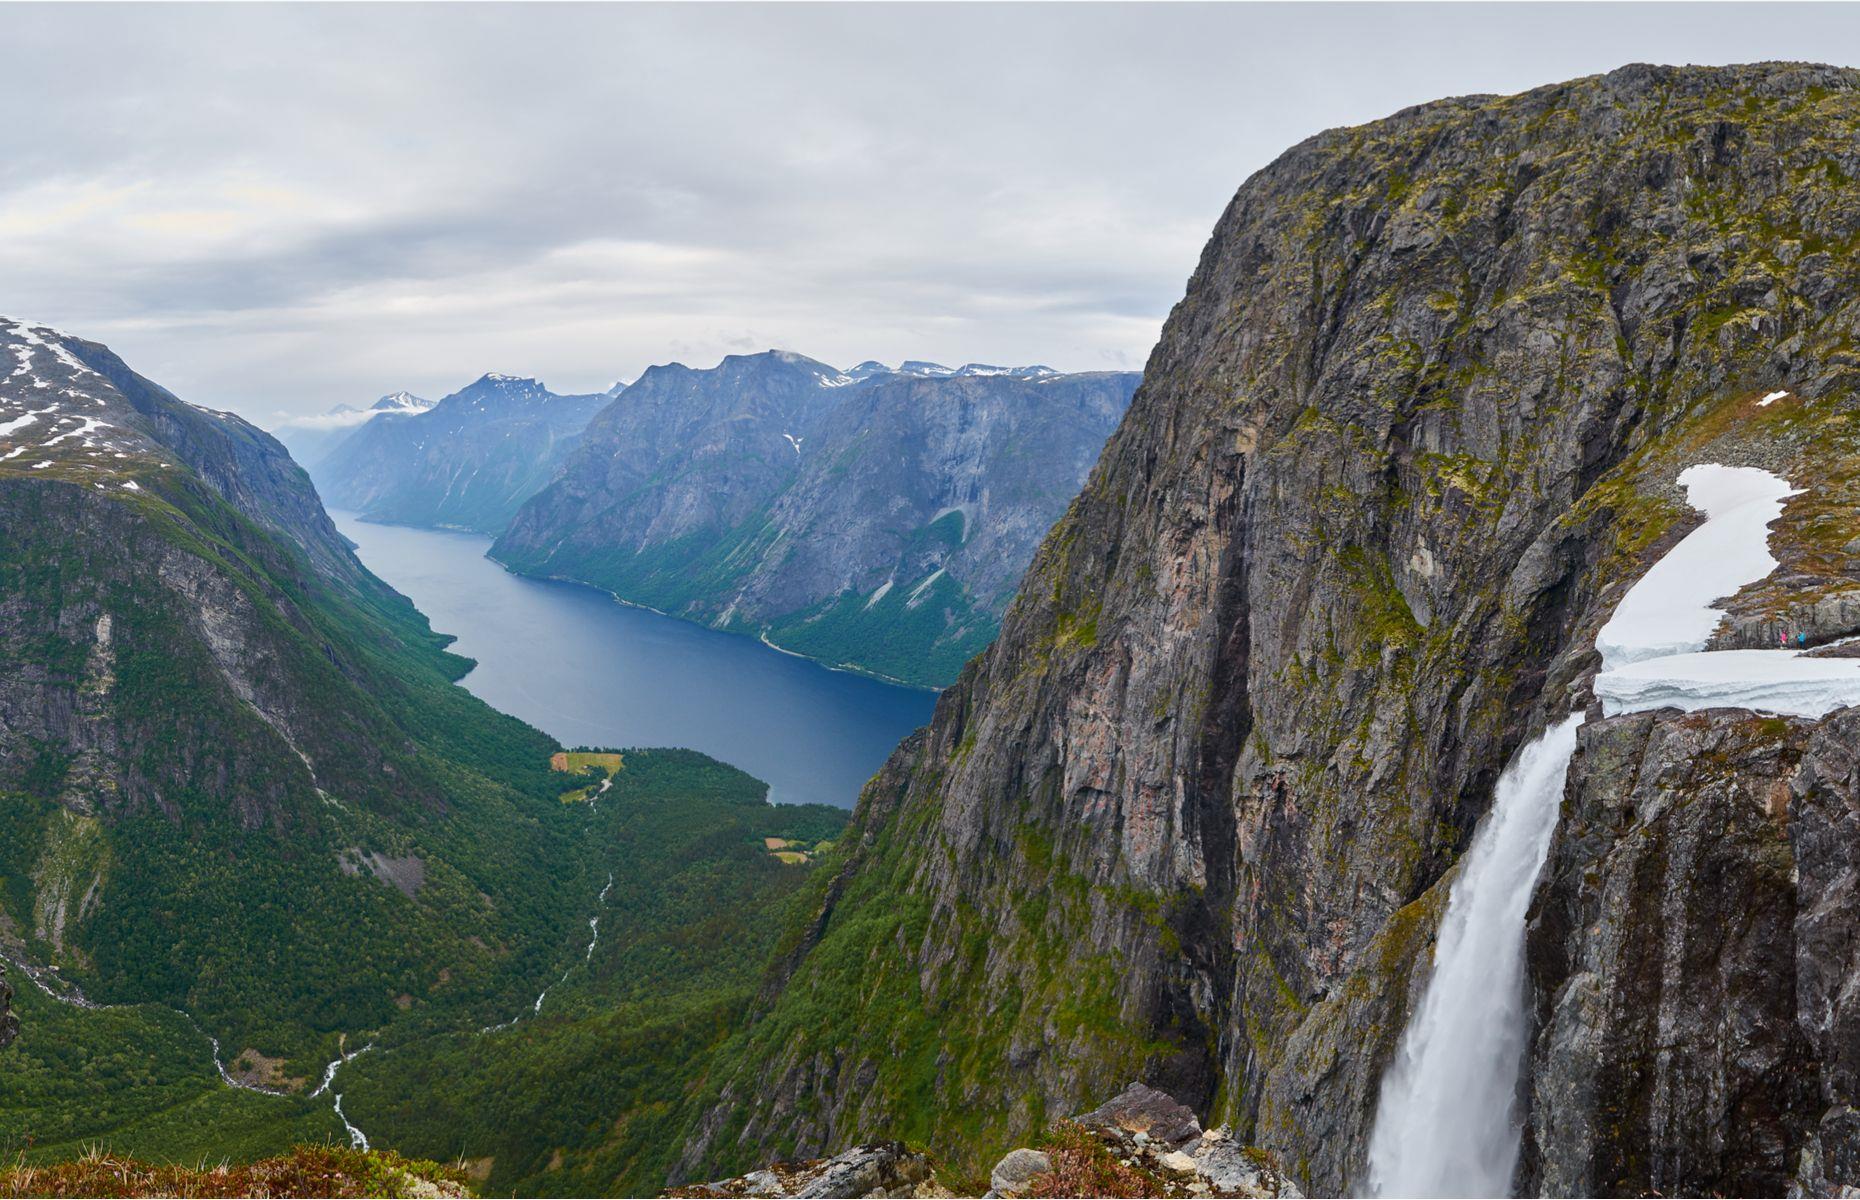 Europe's best waterfalls in stunning photographs